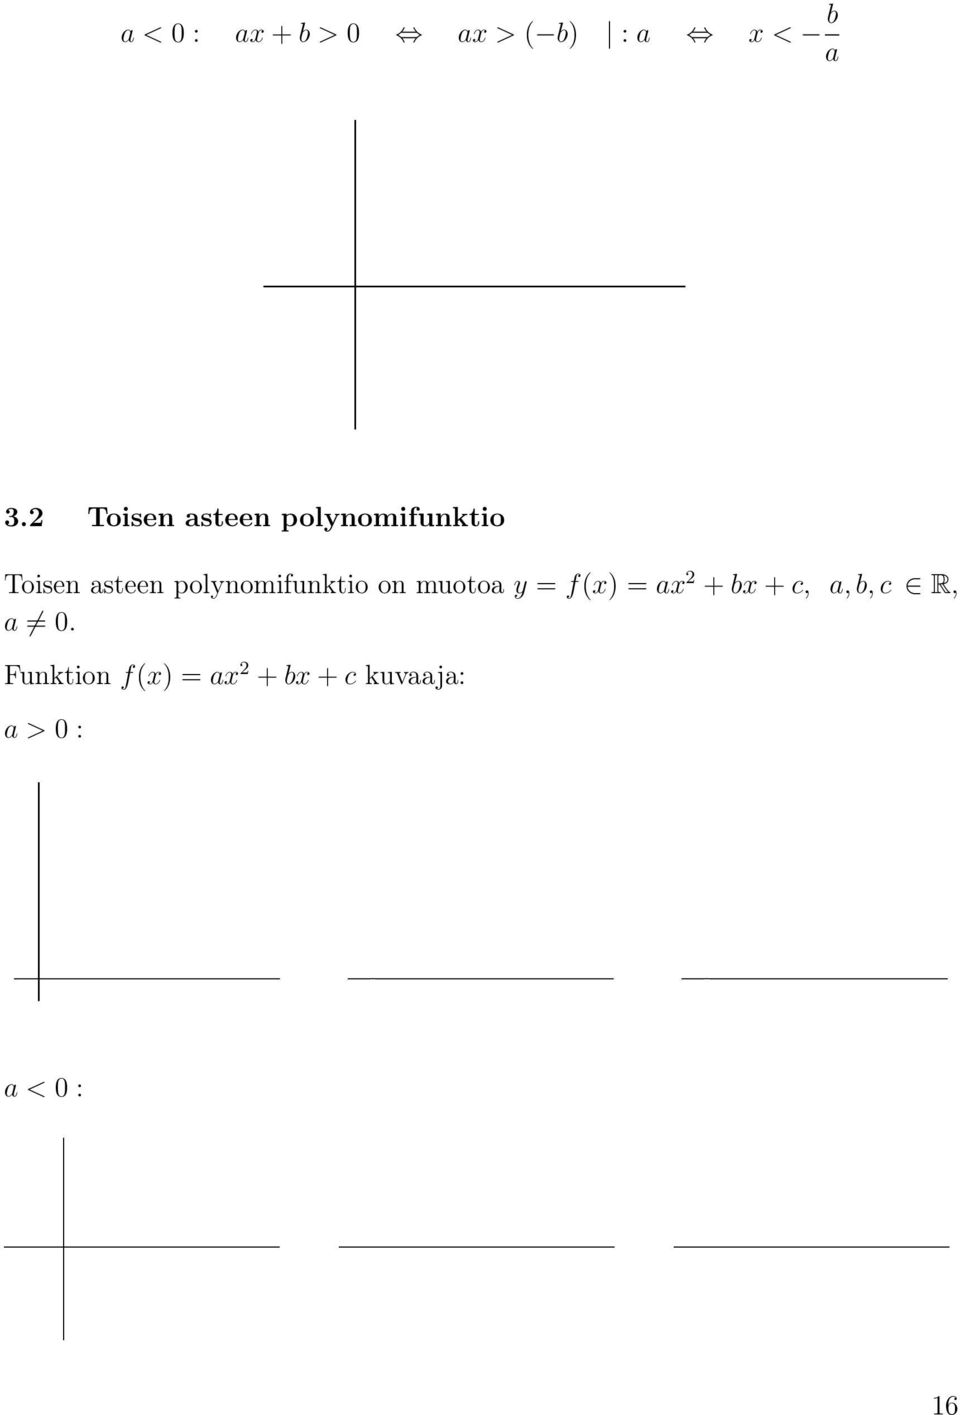 polynomifunktio on muotoa y = f(x) = ax 2 + bx + c,